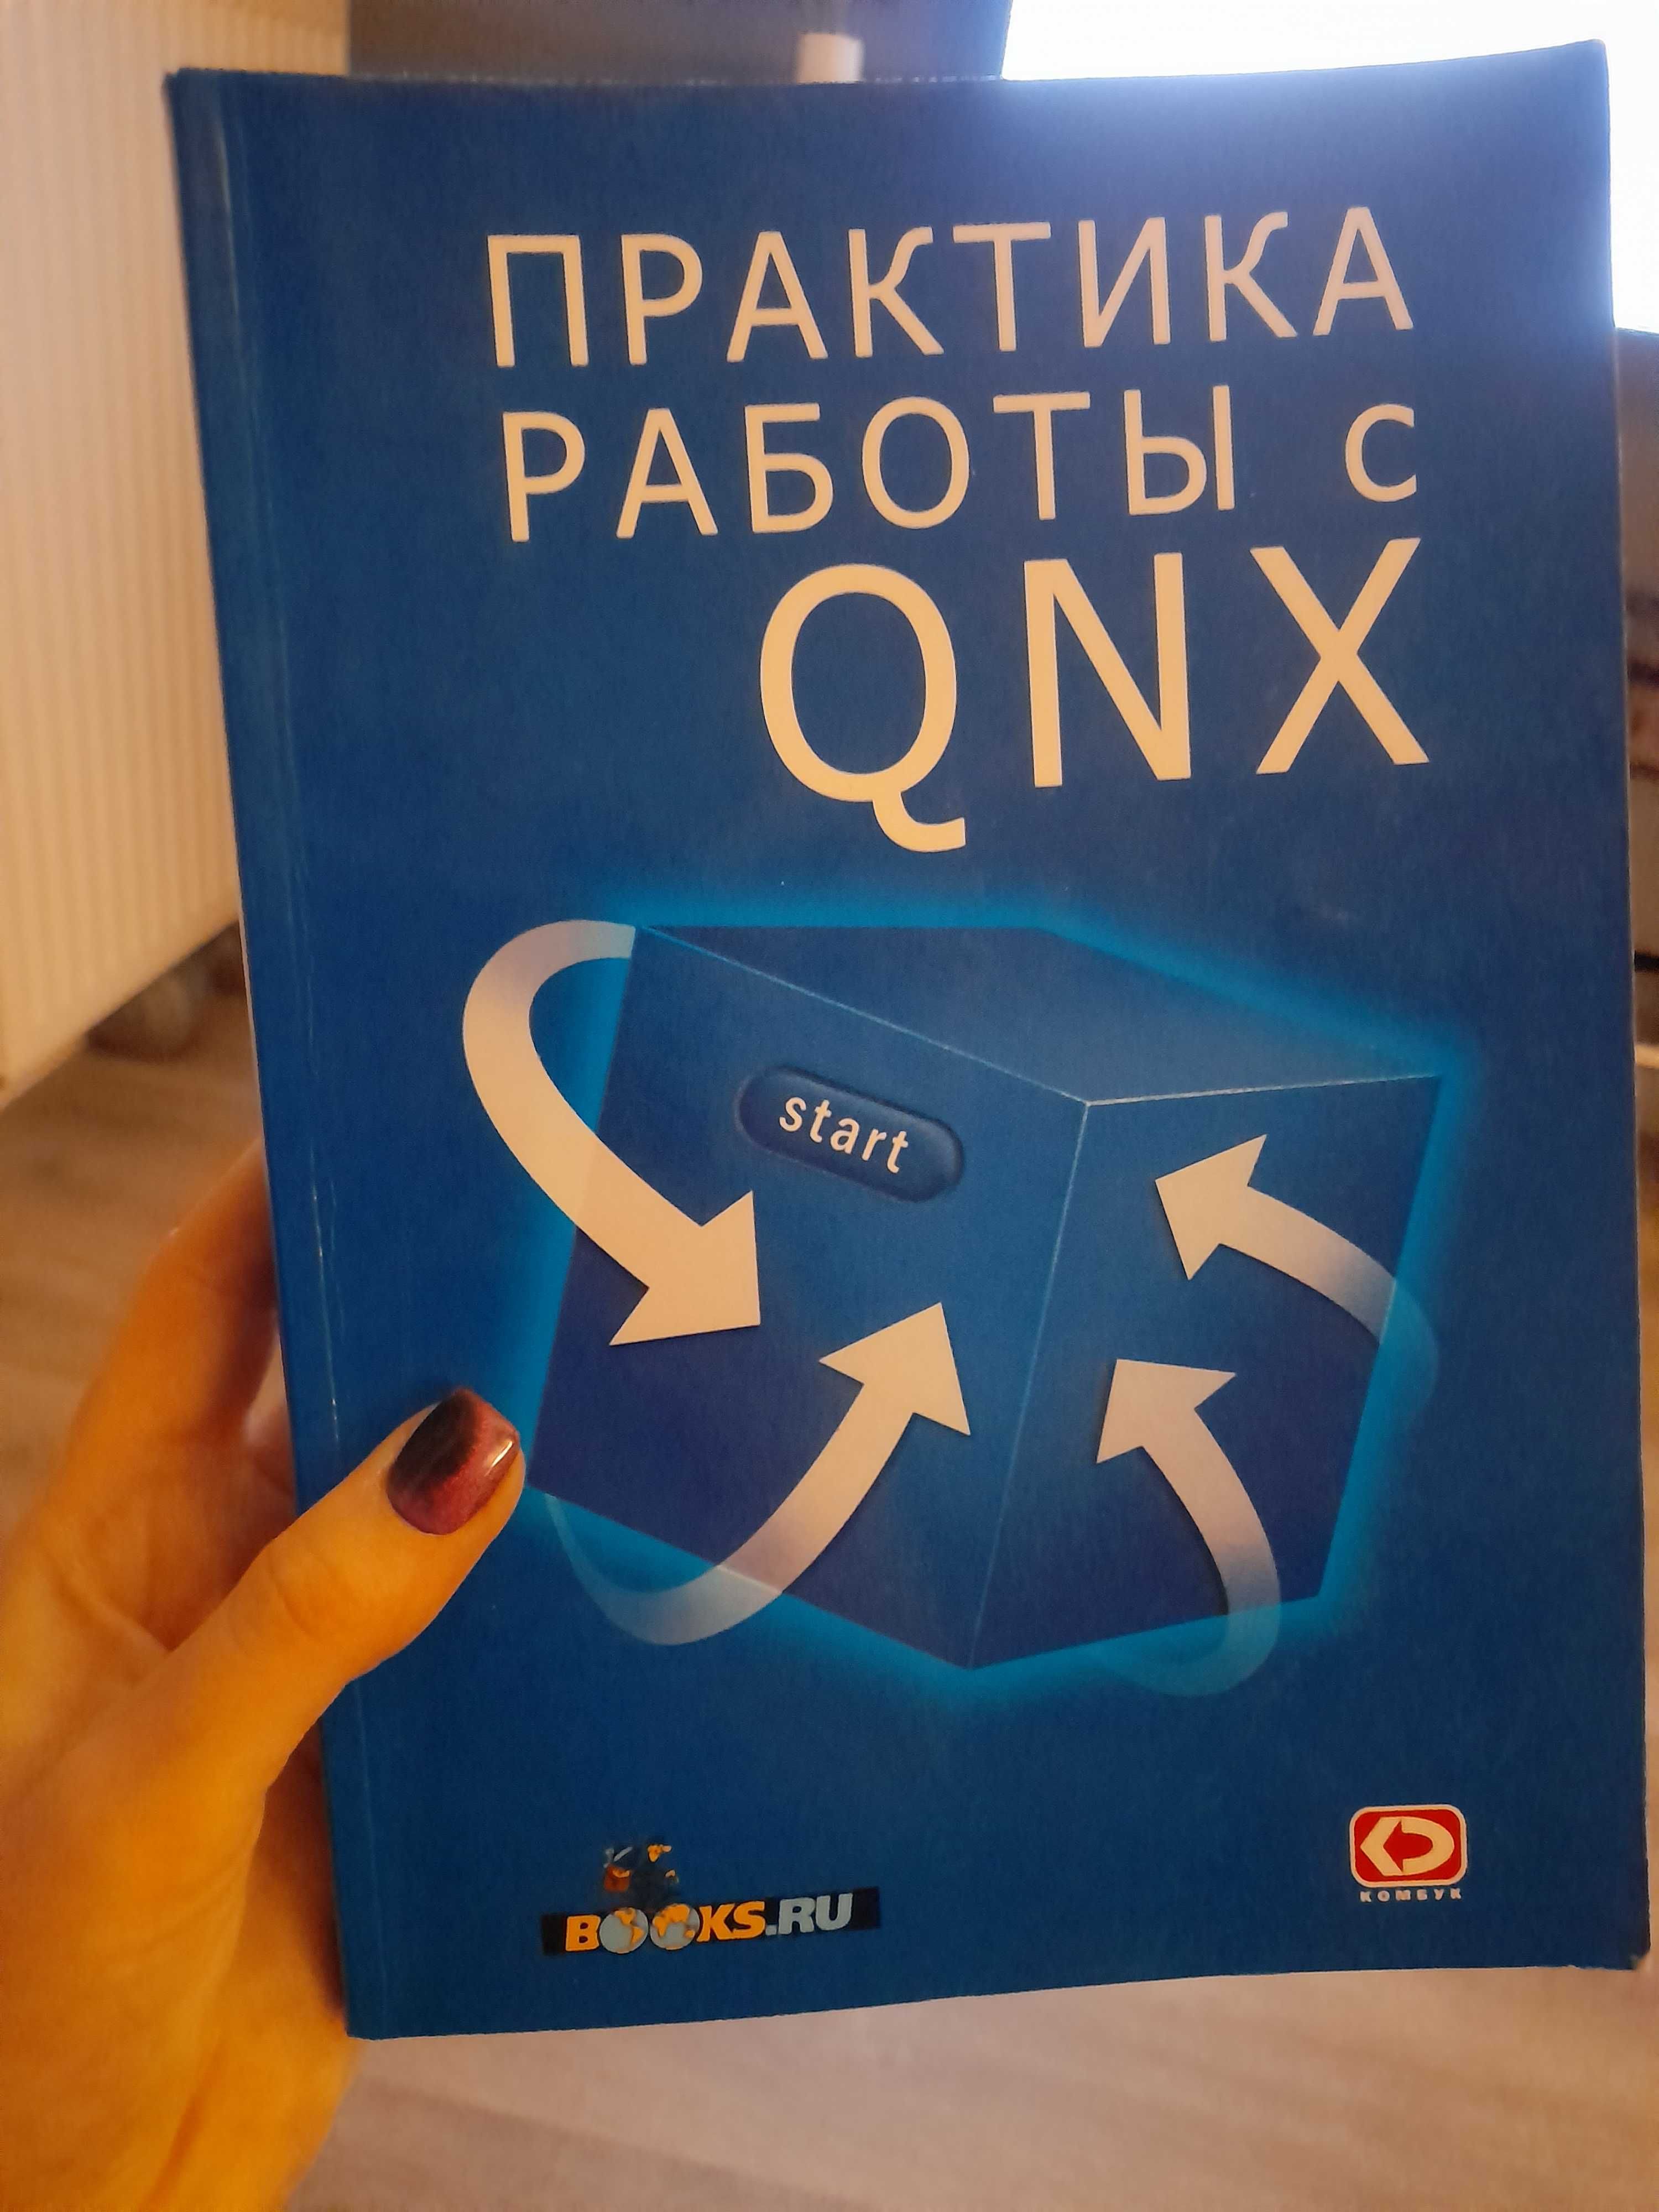 Książka: praca z systemami QNX po rosyjsku